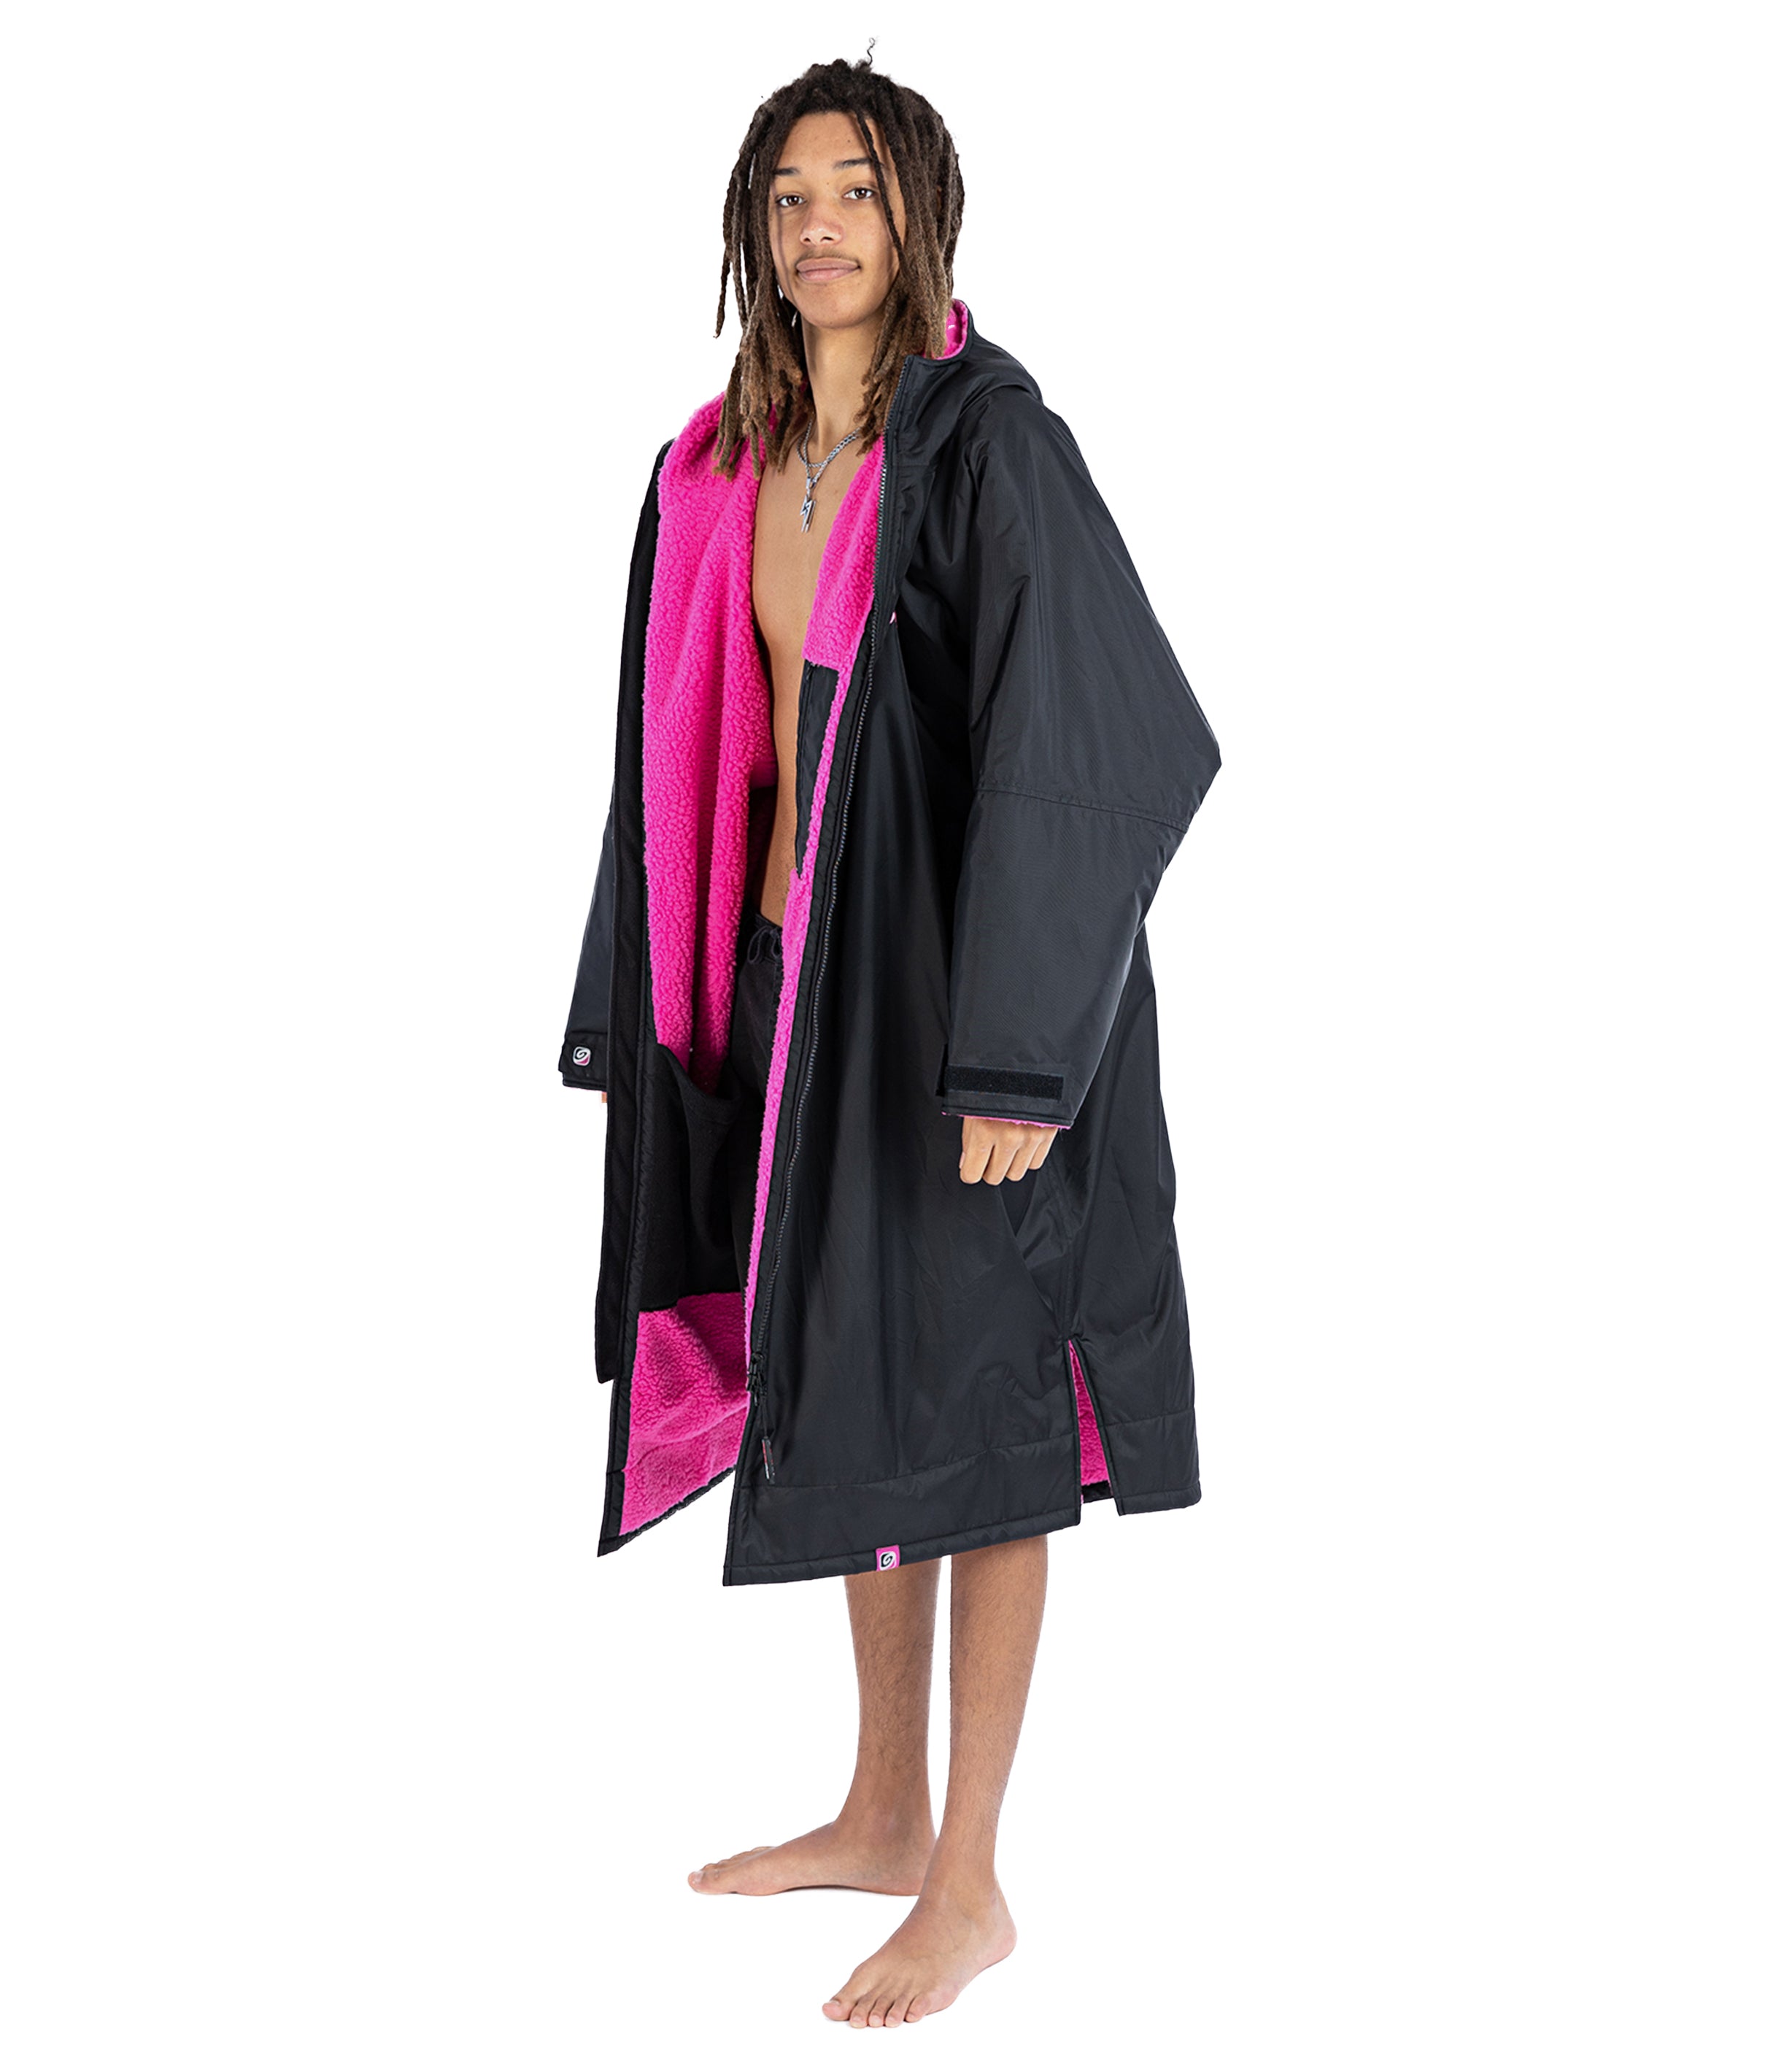 dryrobe Advance Long Sleeve | Black/Pink modelled